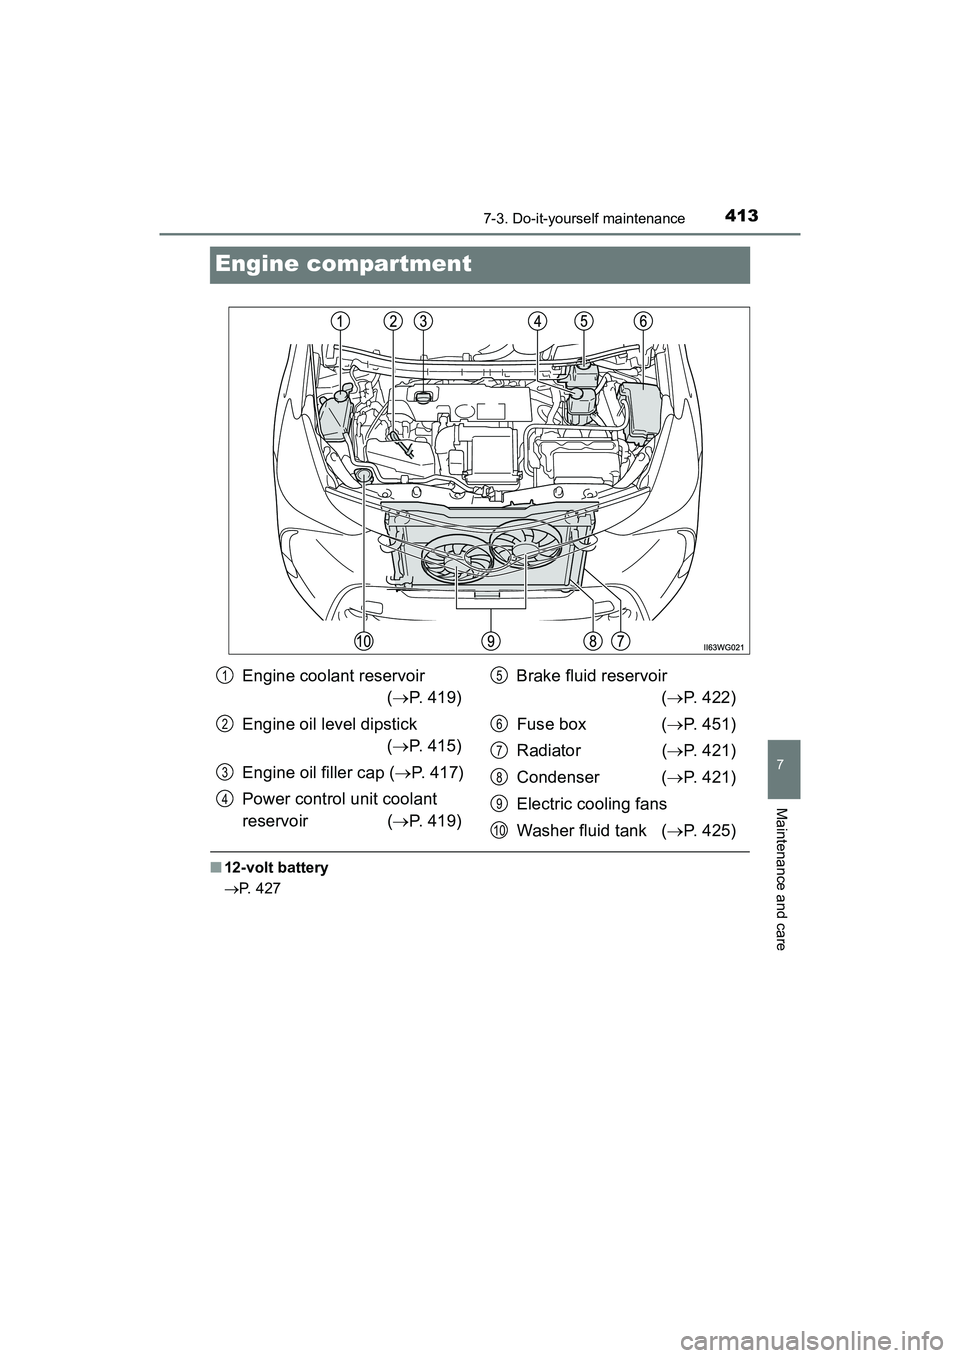 TOYOTA PRIUS V 2018  Owners Manual 413
PRIUS v_OM_OM47B78U_(U)
7-3. Do-it-yourself maintenance
7
Maintenance and care
Engine compartment
■12-volt battery
P. 427
Engine coolant reservoir 
(P. 419)
Engine oil level dipstick  (